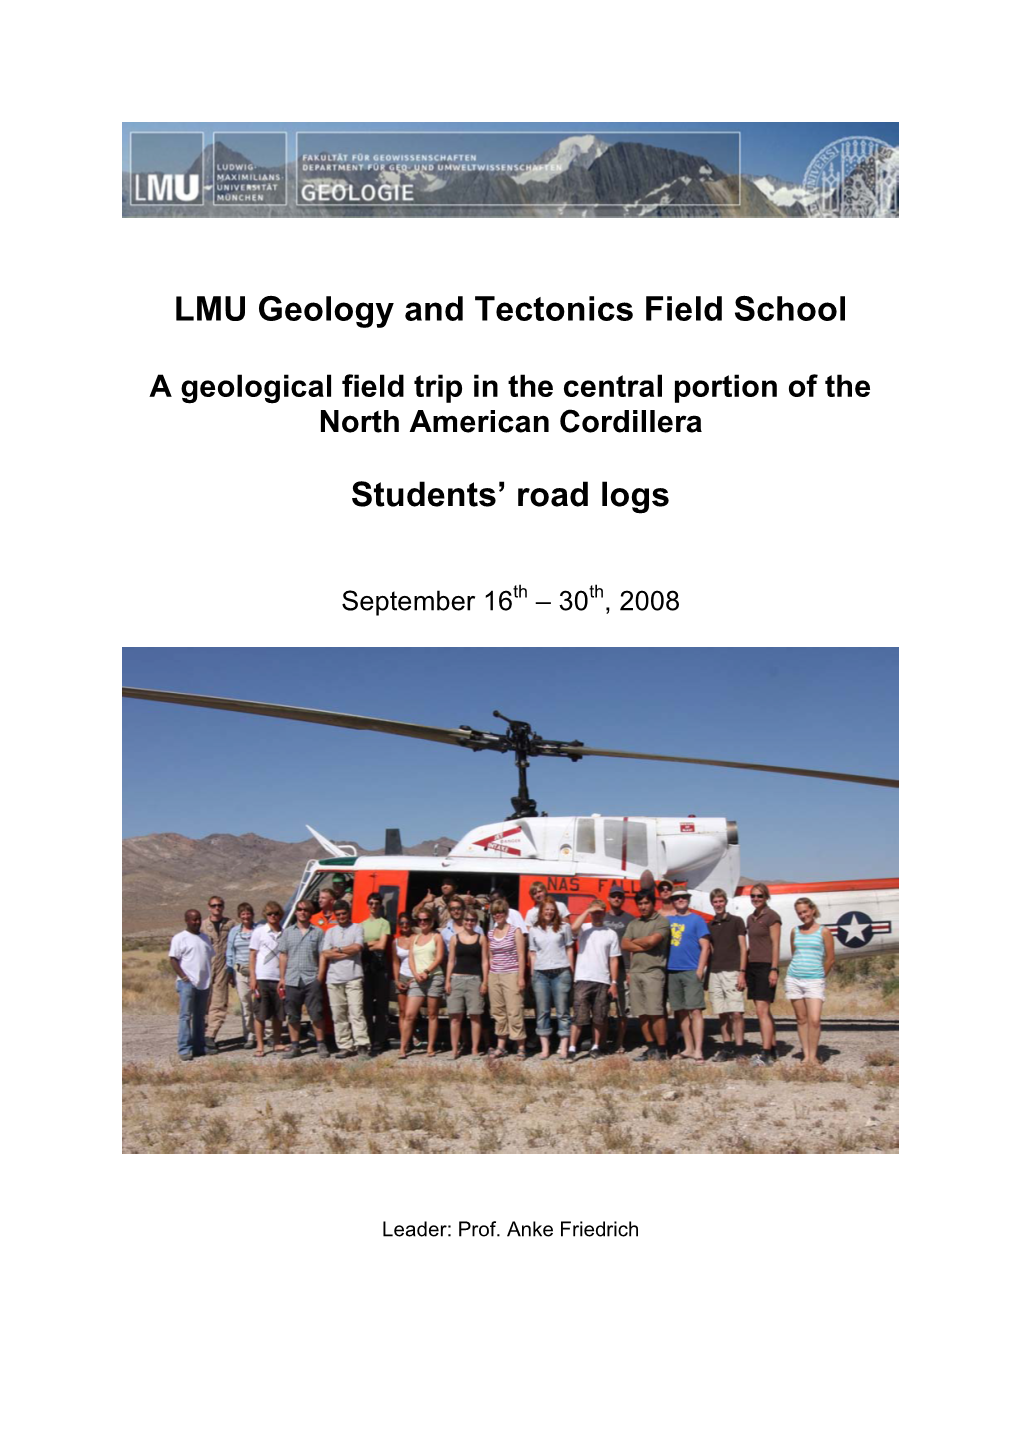 LMU Geology and Tectonics Field School Students' Road Logs